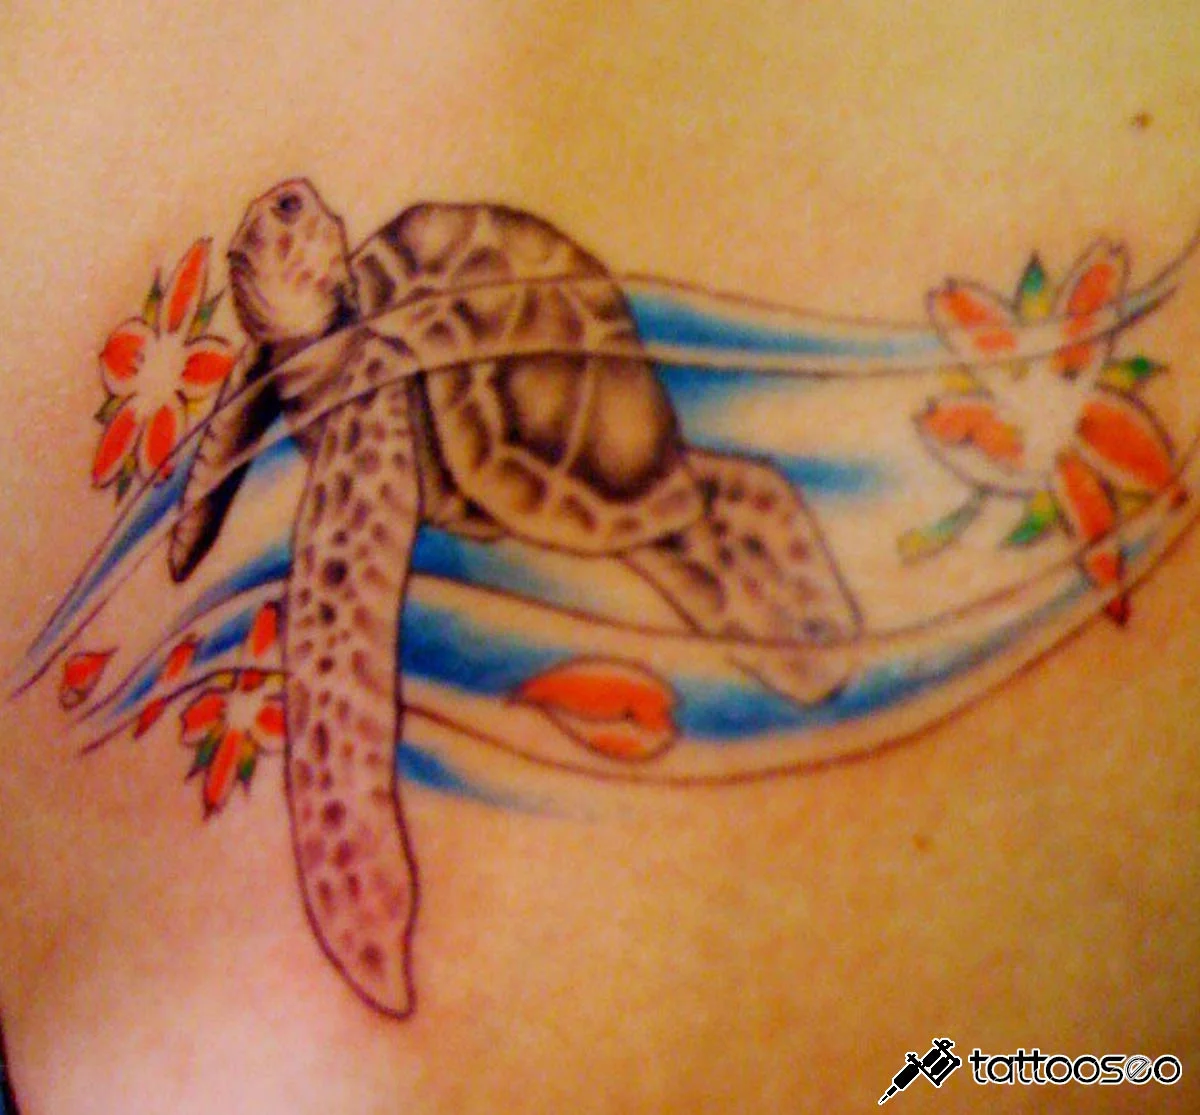 Sea turtle tattoo meaning